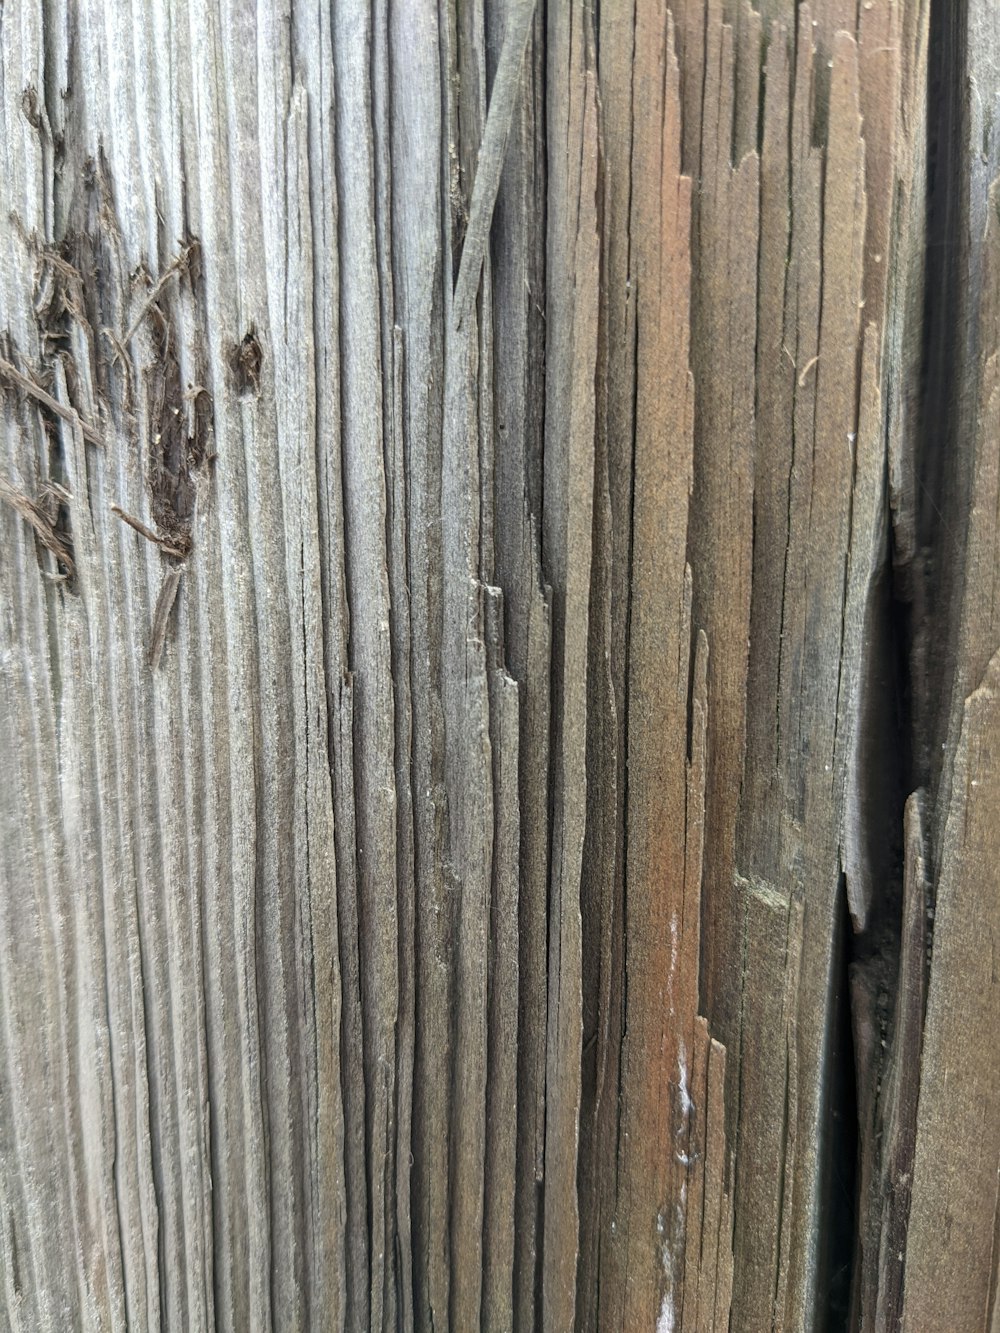 a close up of wood